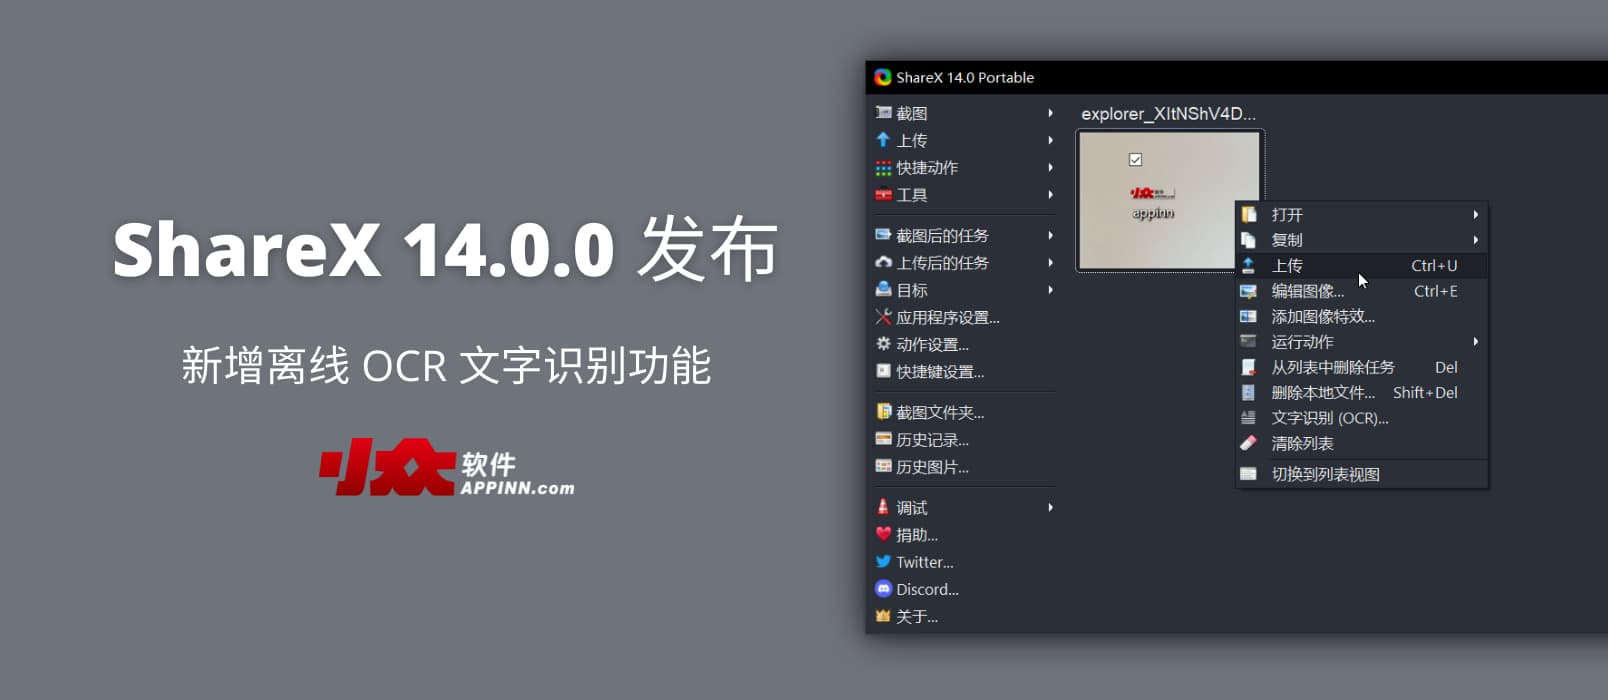 ShareX 14.0.0 发布，新增离线 OCR 文字识别功能